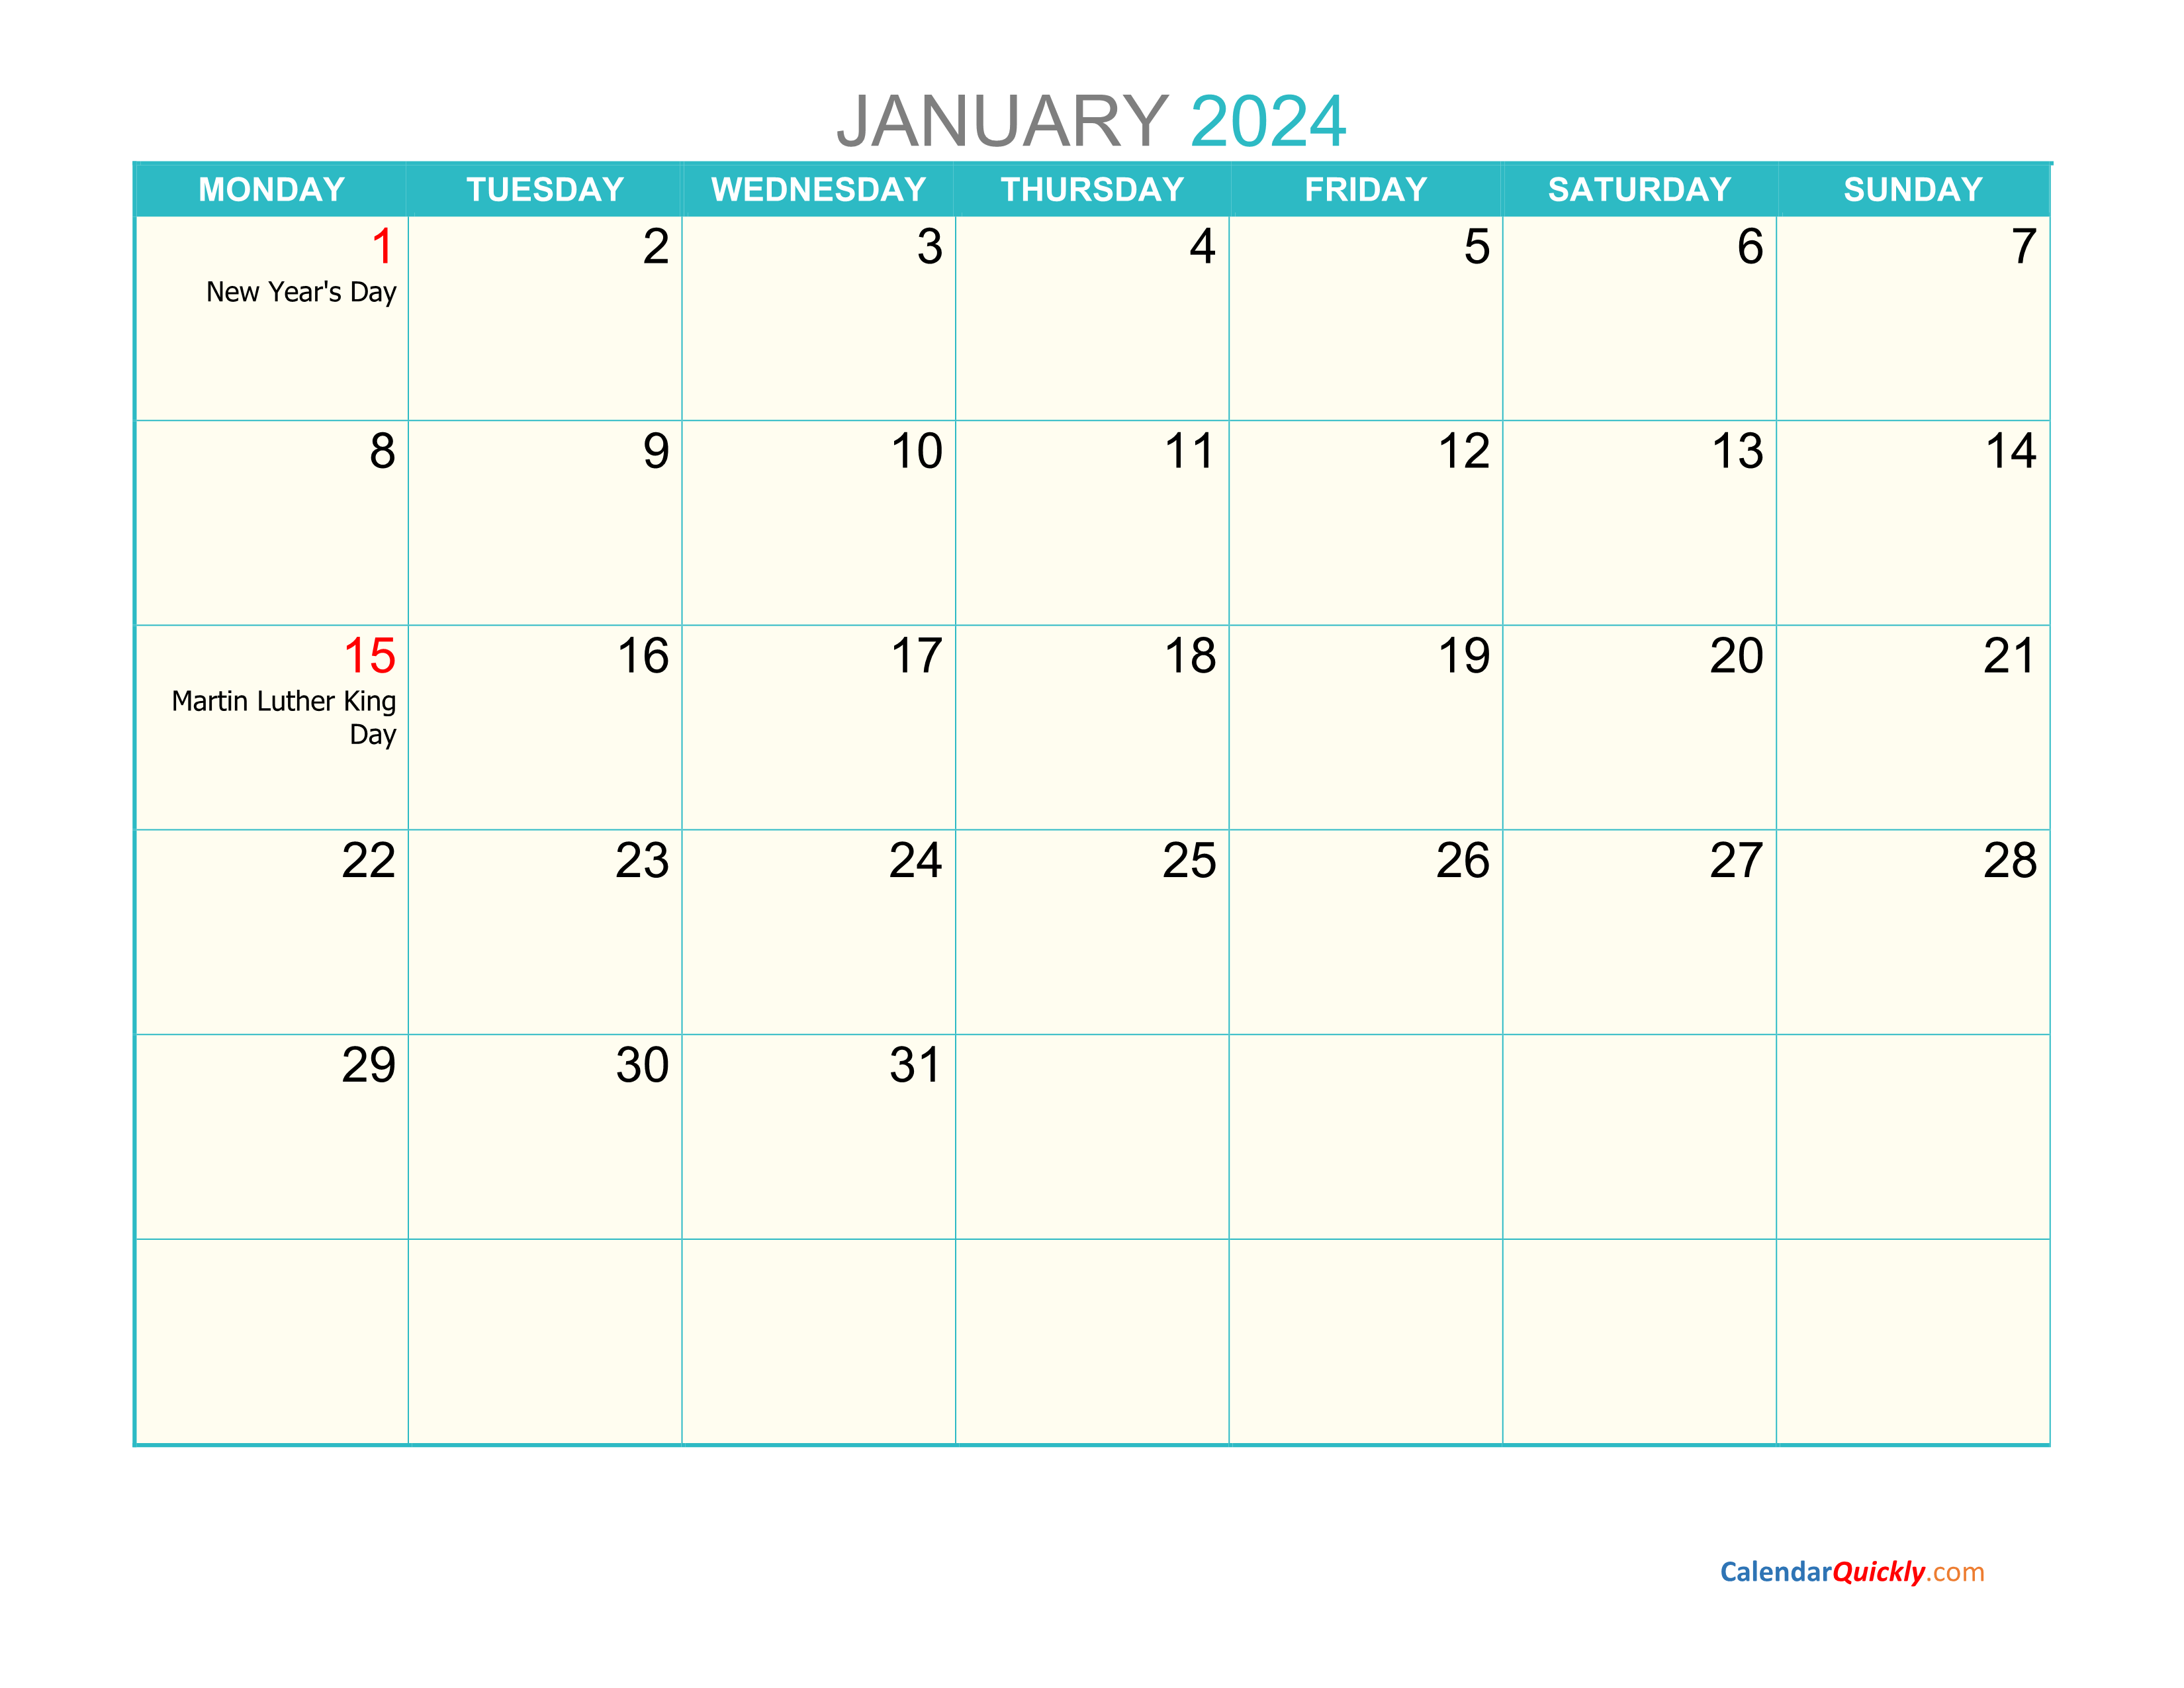 january-monday-2024-calendar-printable-calendar-quickly